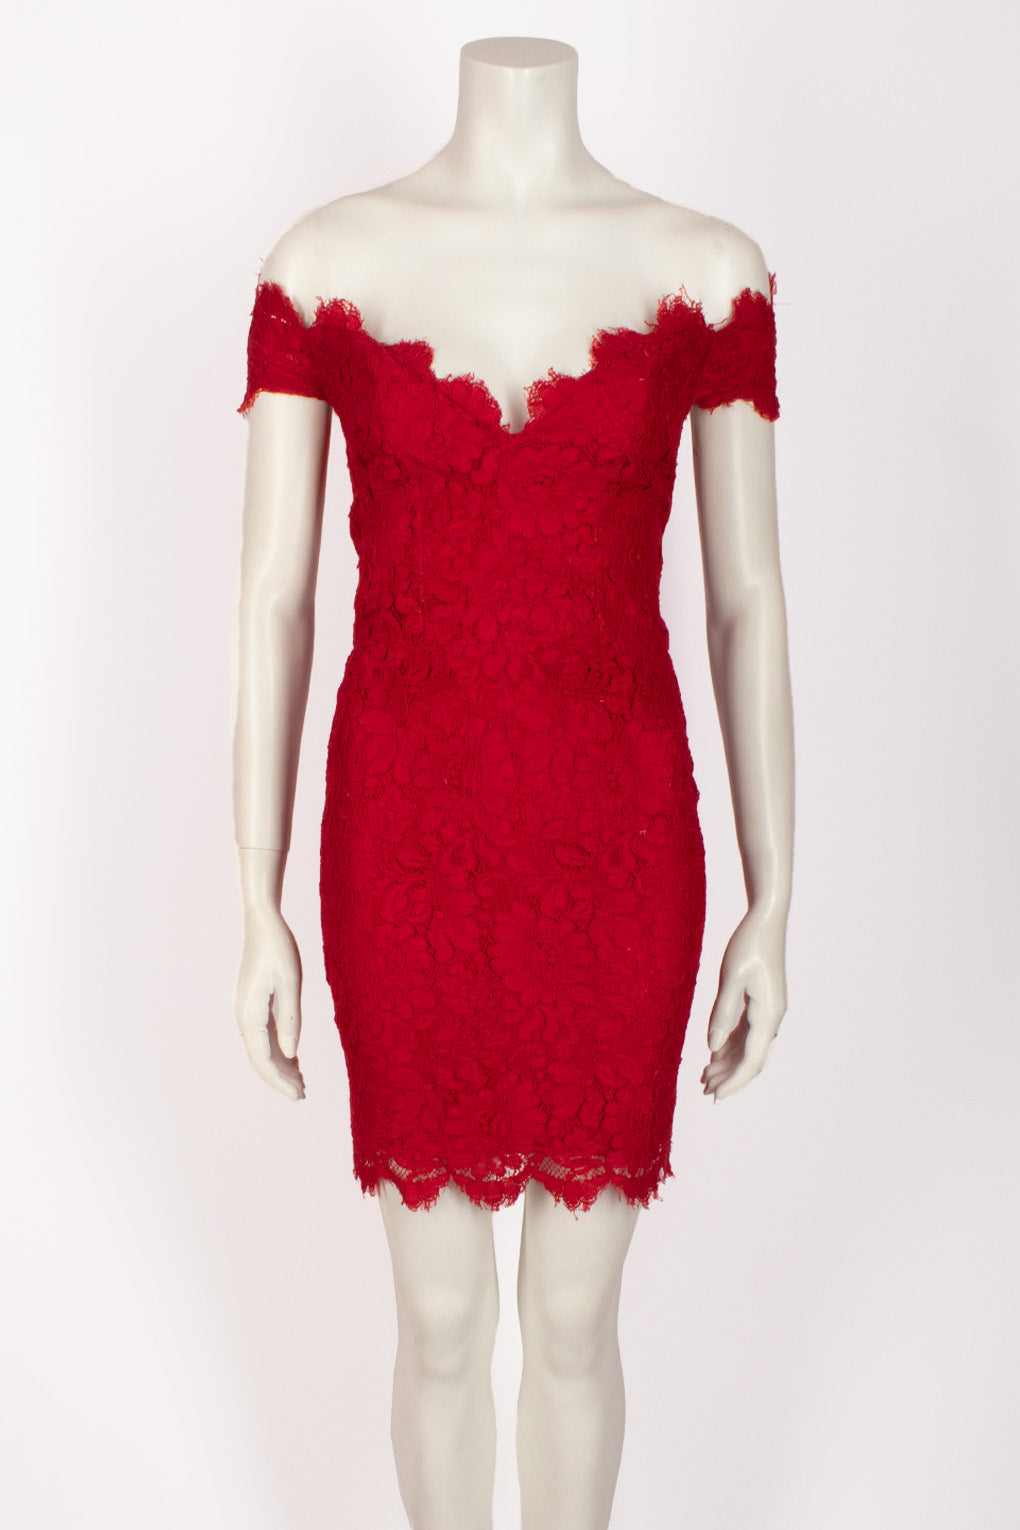 ANTONY PRICE Red Lace Dress